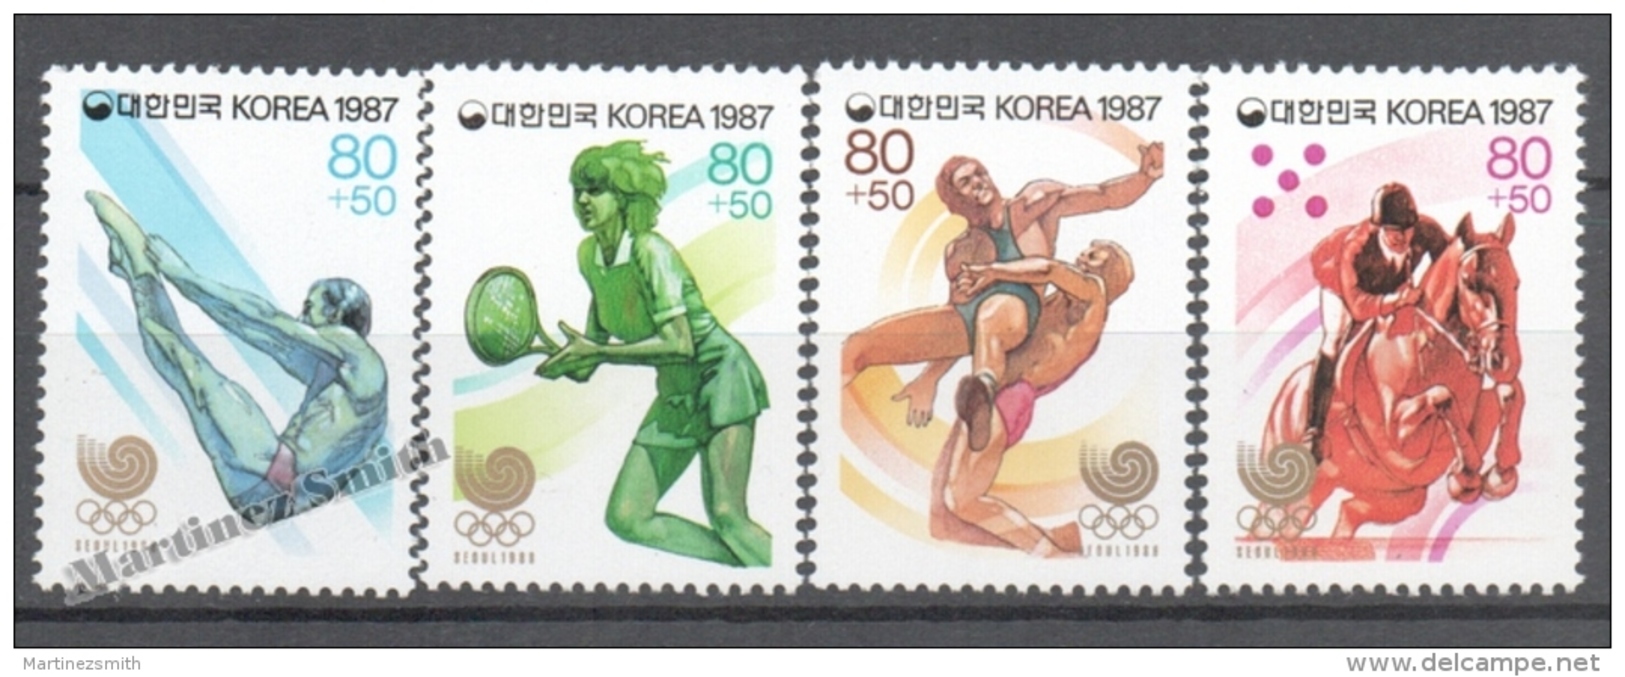 South Korea 1987 Yvert 1363-66, Seoul Headquarters Of The 1988 Olympic Games - MNH - Corée Du Sud